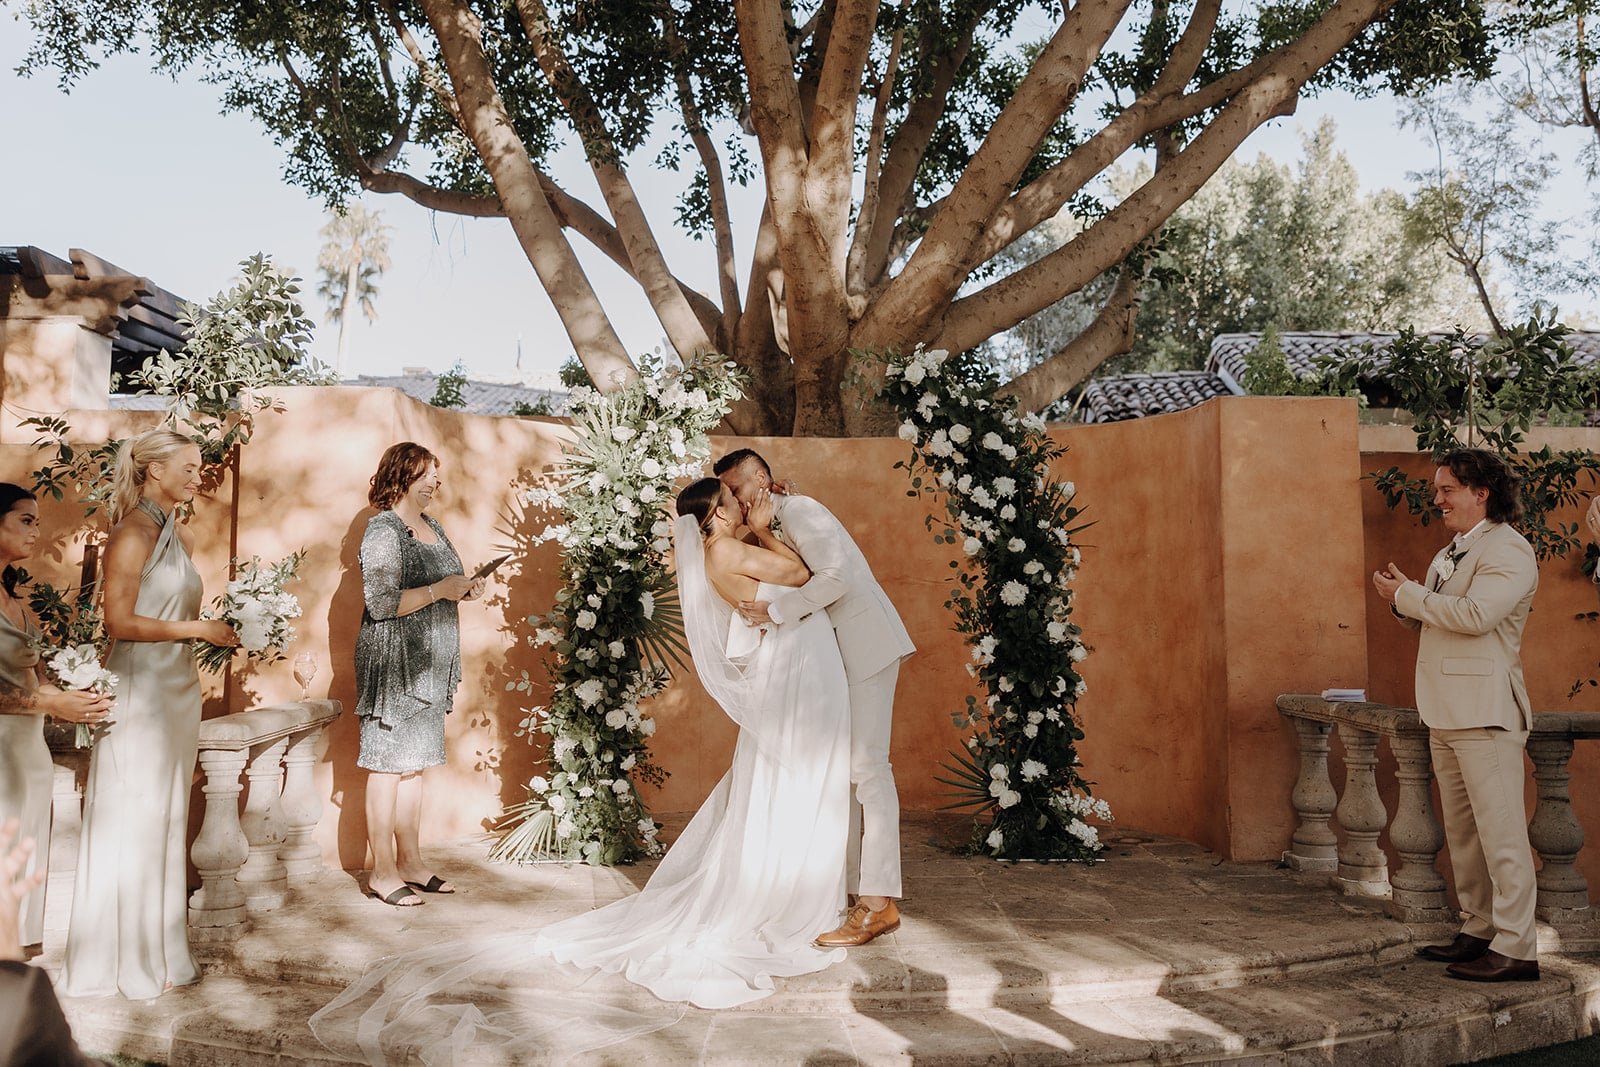 Bride and groom kiss at outdoor wedding in Arizona